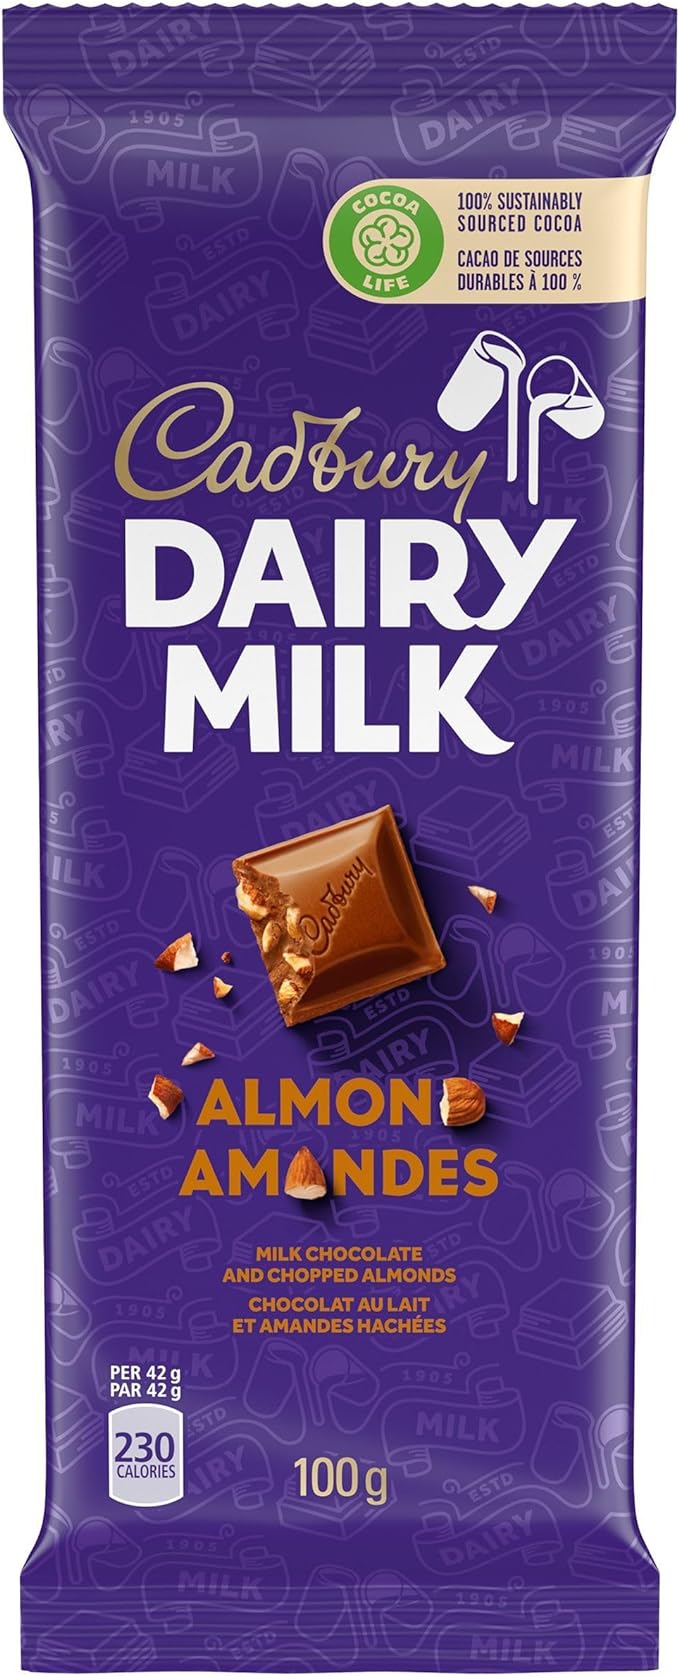 Cadbury Dairy Milk, Almond, Milk Chocolate and Chopped Almonds, Chocolate Bar, 100g